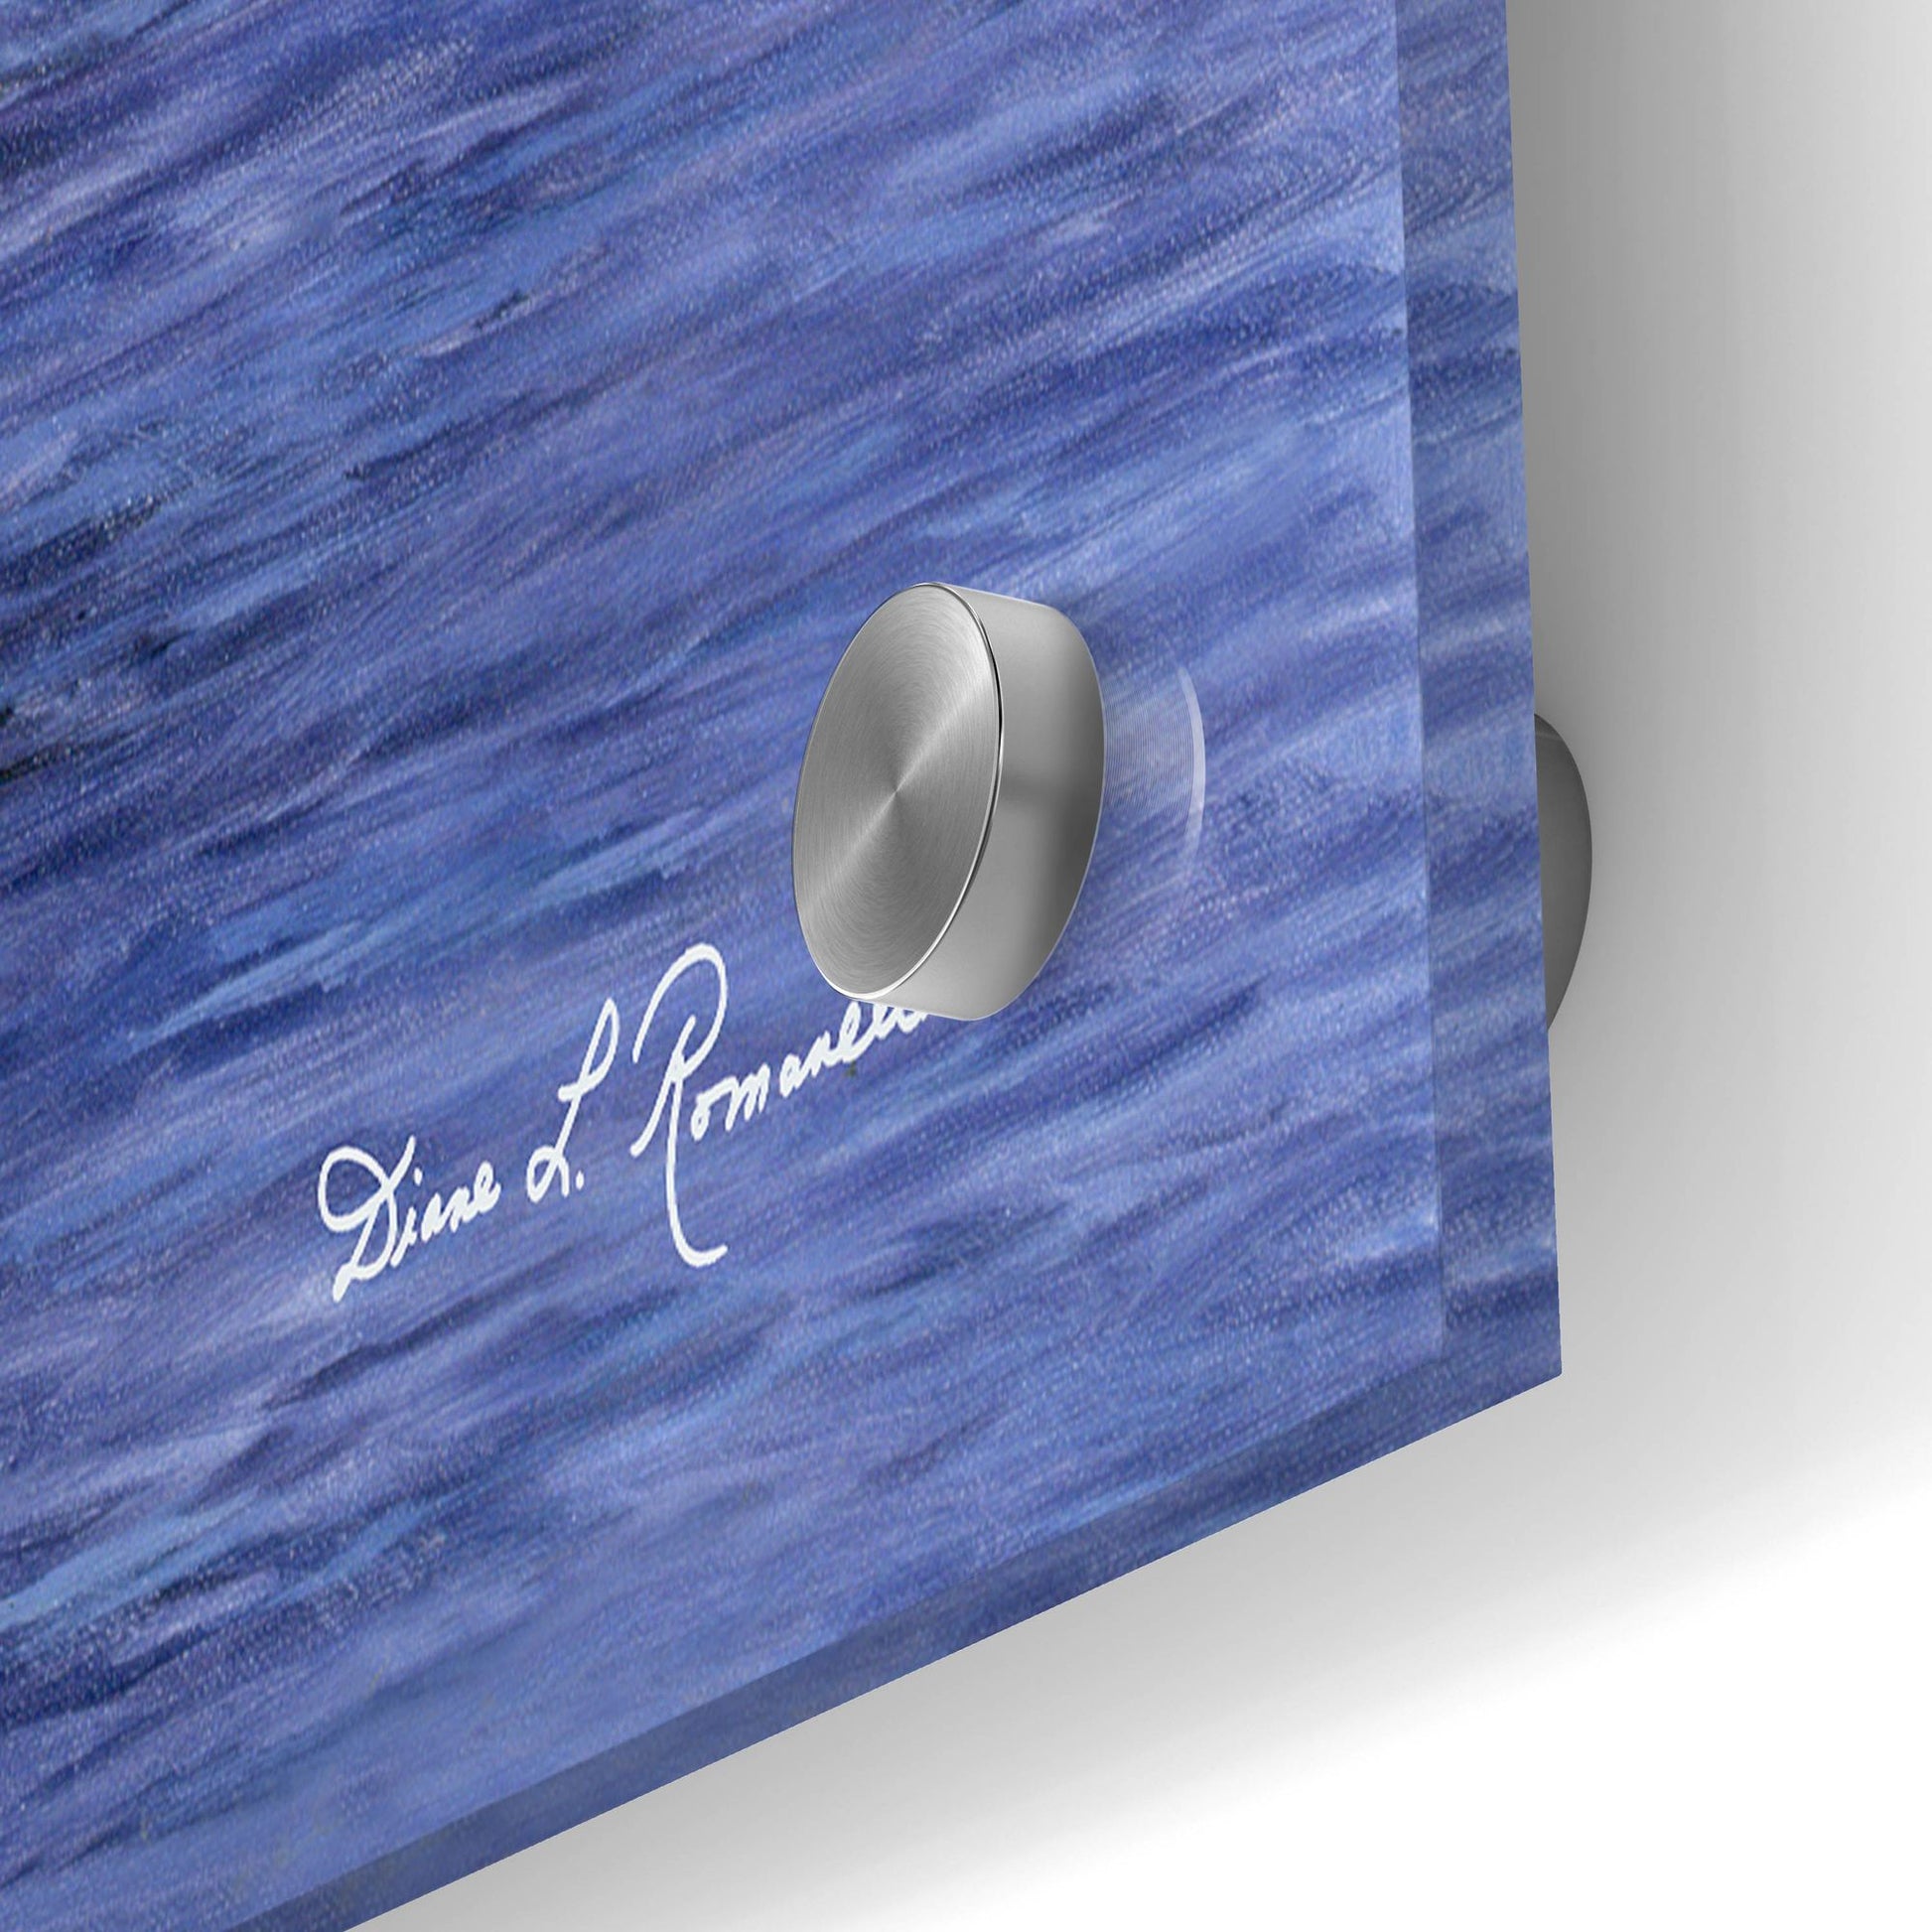 Epic Art ' Blue Sails' by Diane Romanello, Acrylic Glass Wall Art,36x24